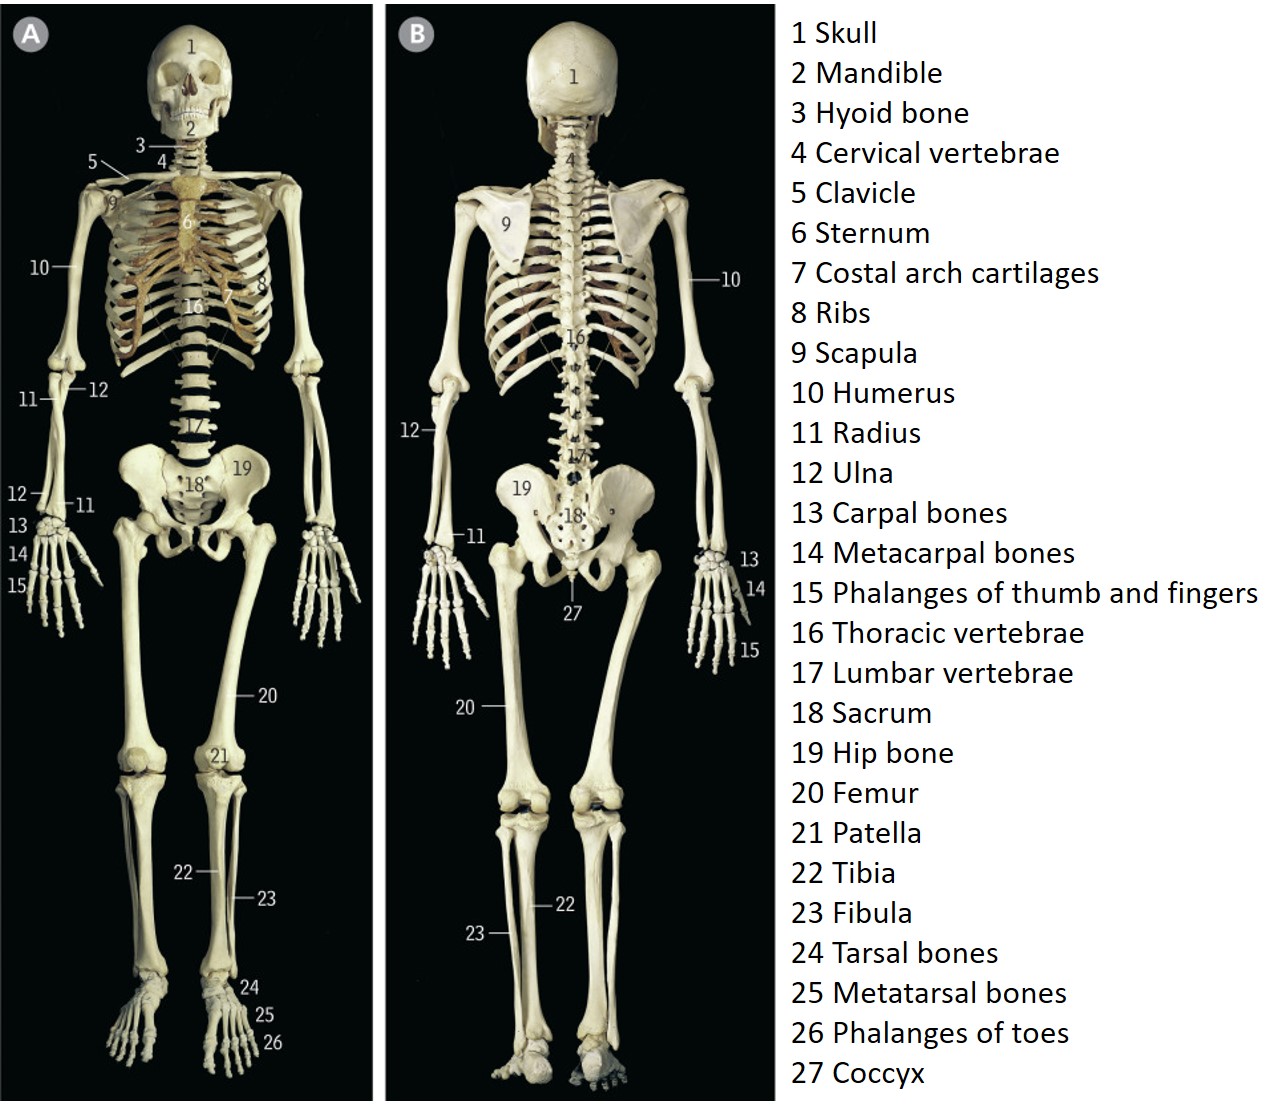 Human Skeleton with bones labeled.